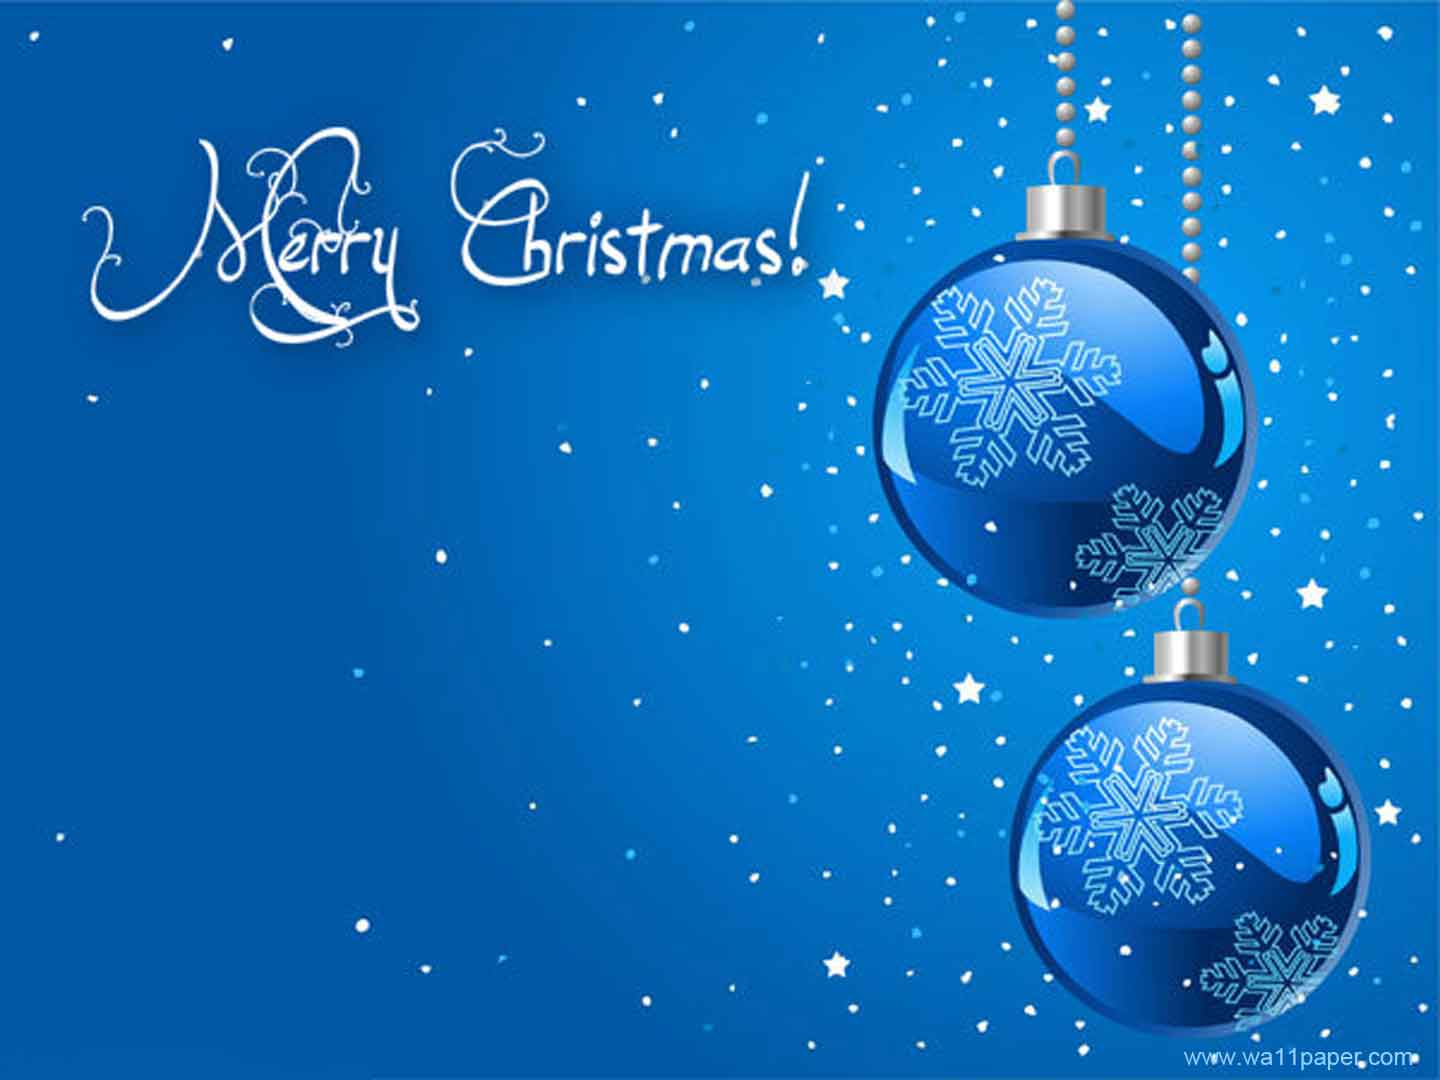 Free download Blue Christmas Wallpaper [1440x1080] for your Desktop, Mobile & Tablet. Explore Blue Christmas Background. Blue Christmas Wallpaper, Blue Christmas Tree Wallpaper